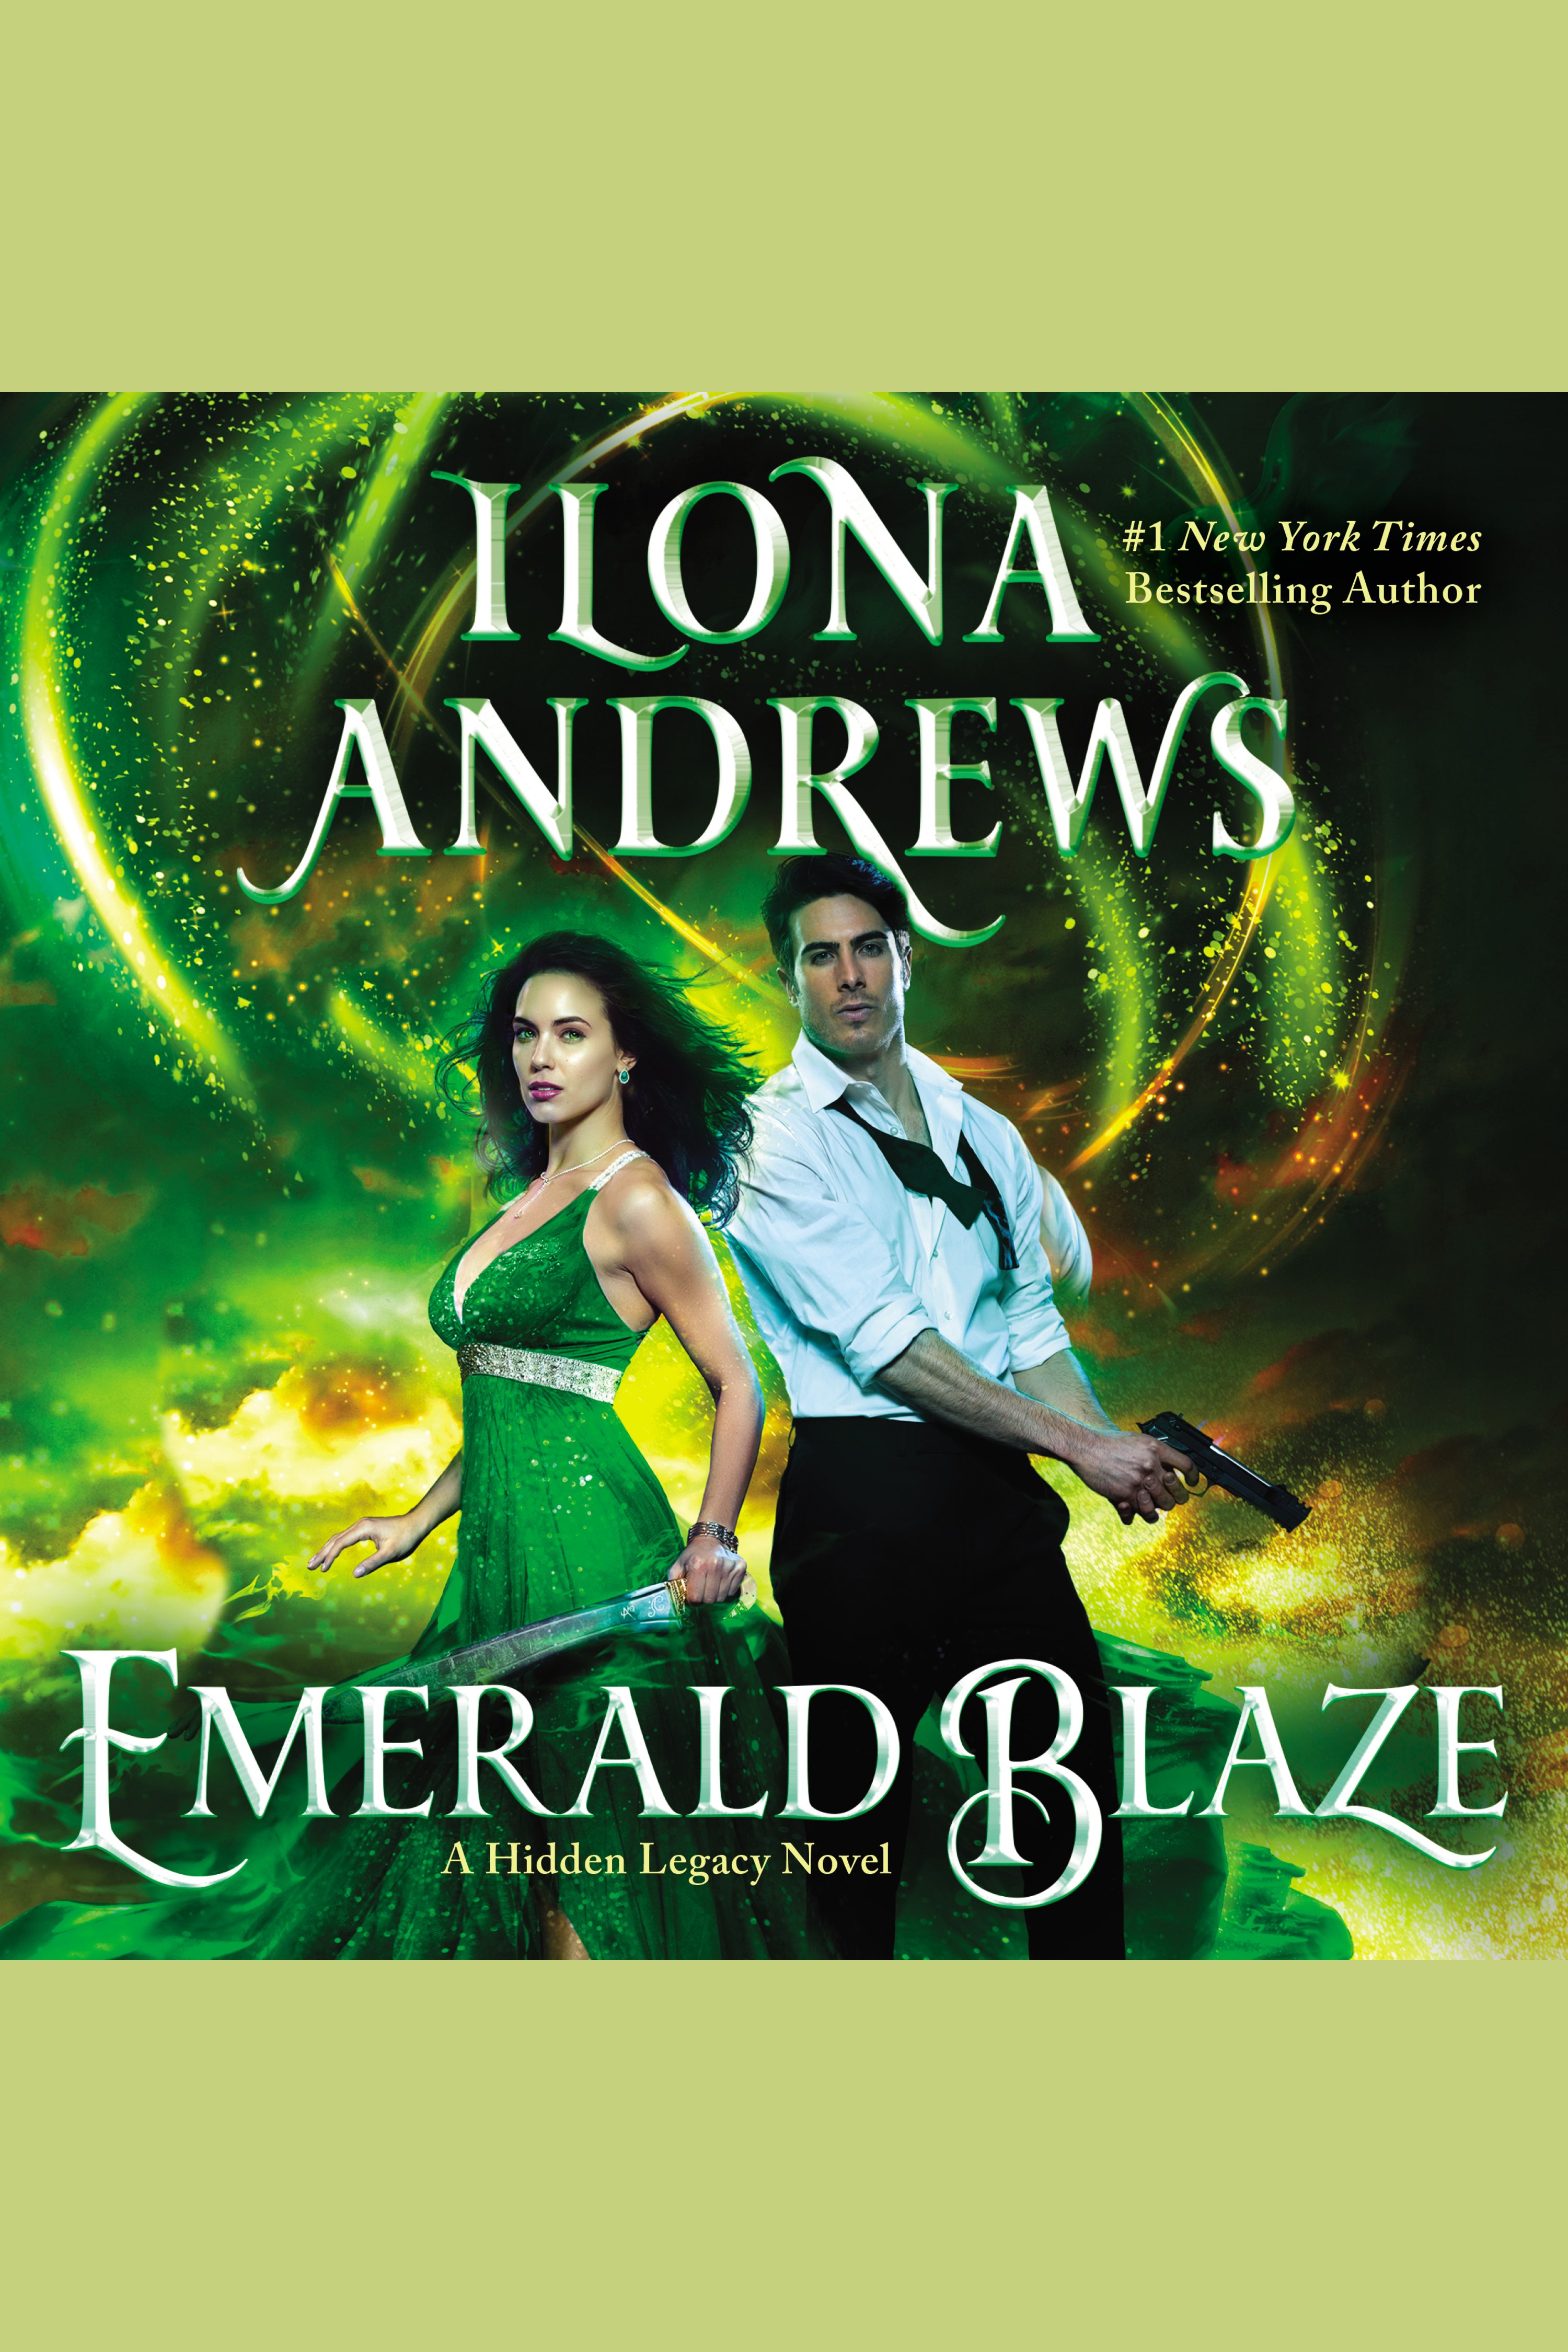 Emerald blaze cover image